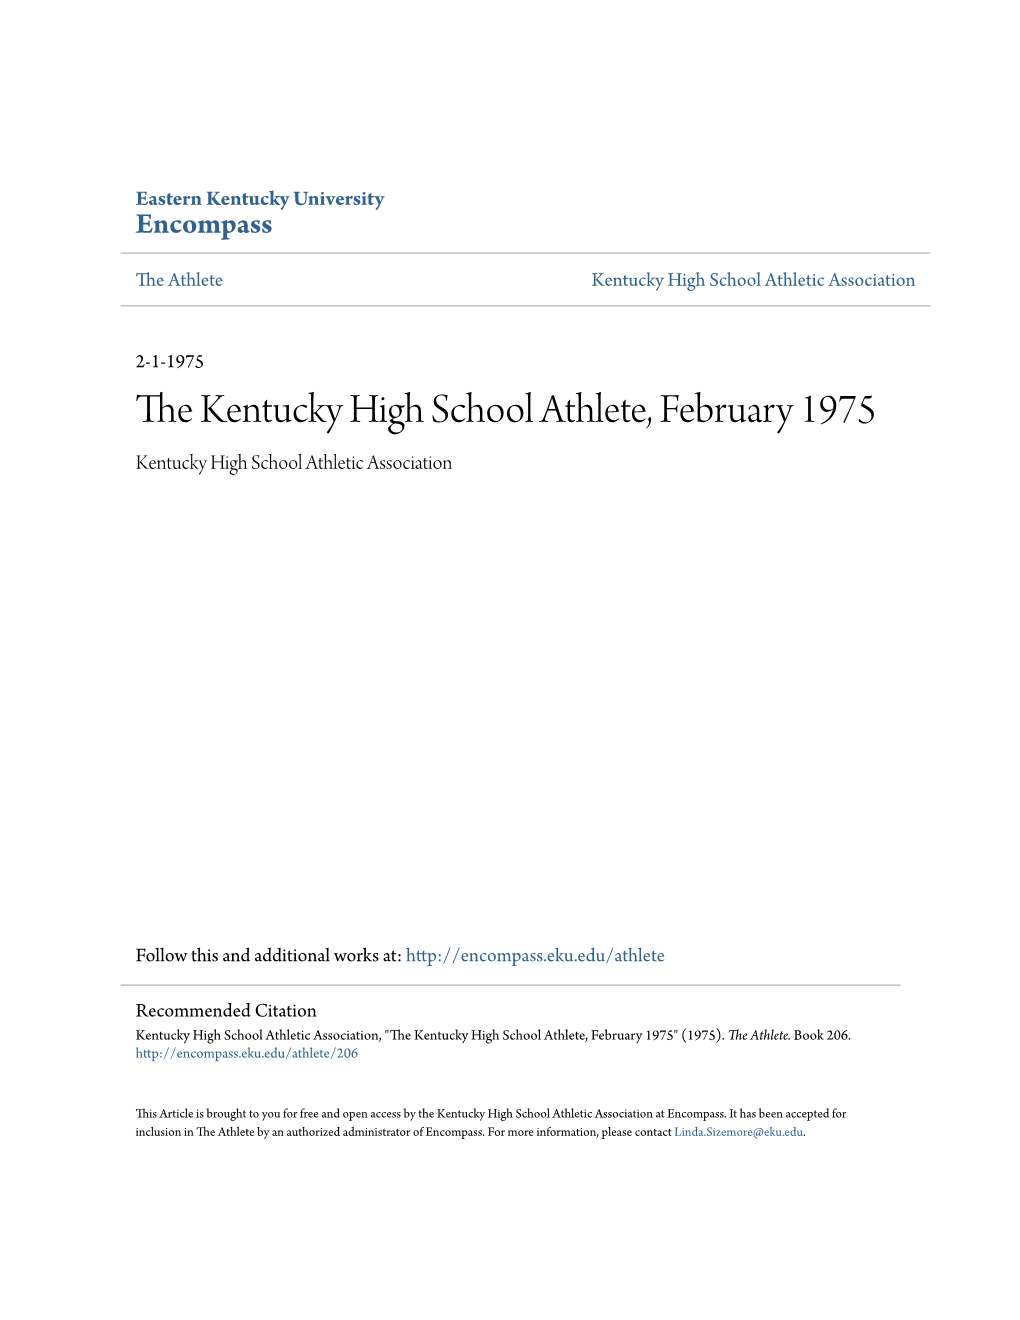 The Kentucky High School Athlete, February 1975 Kentucky High School Athletic Association